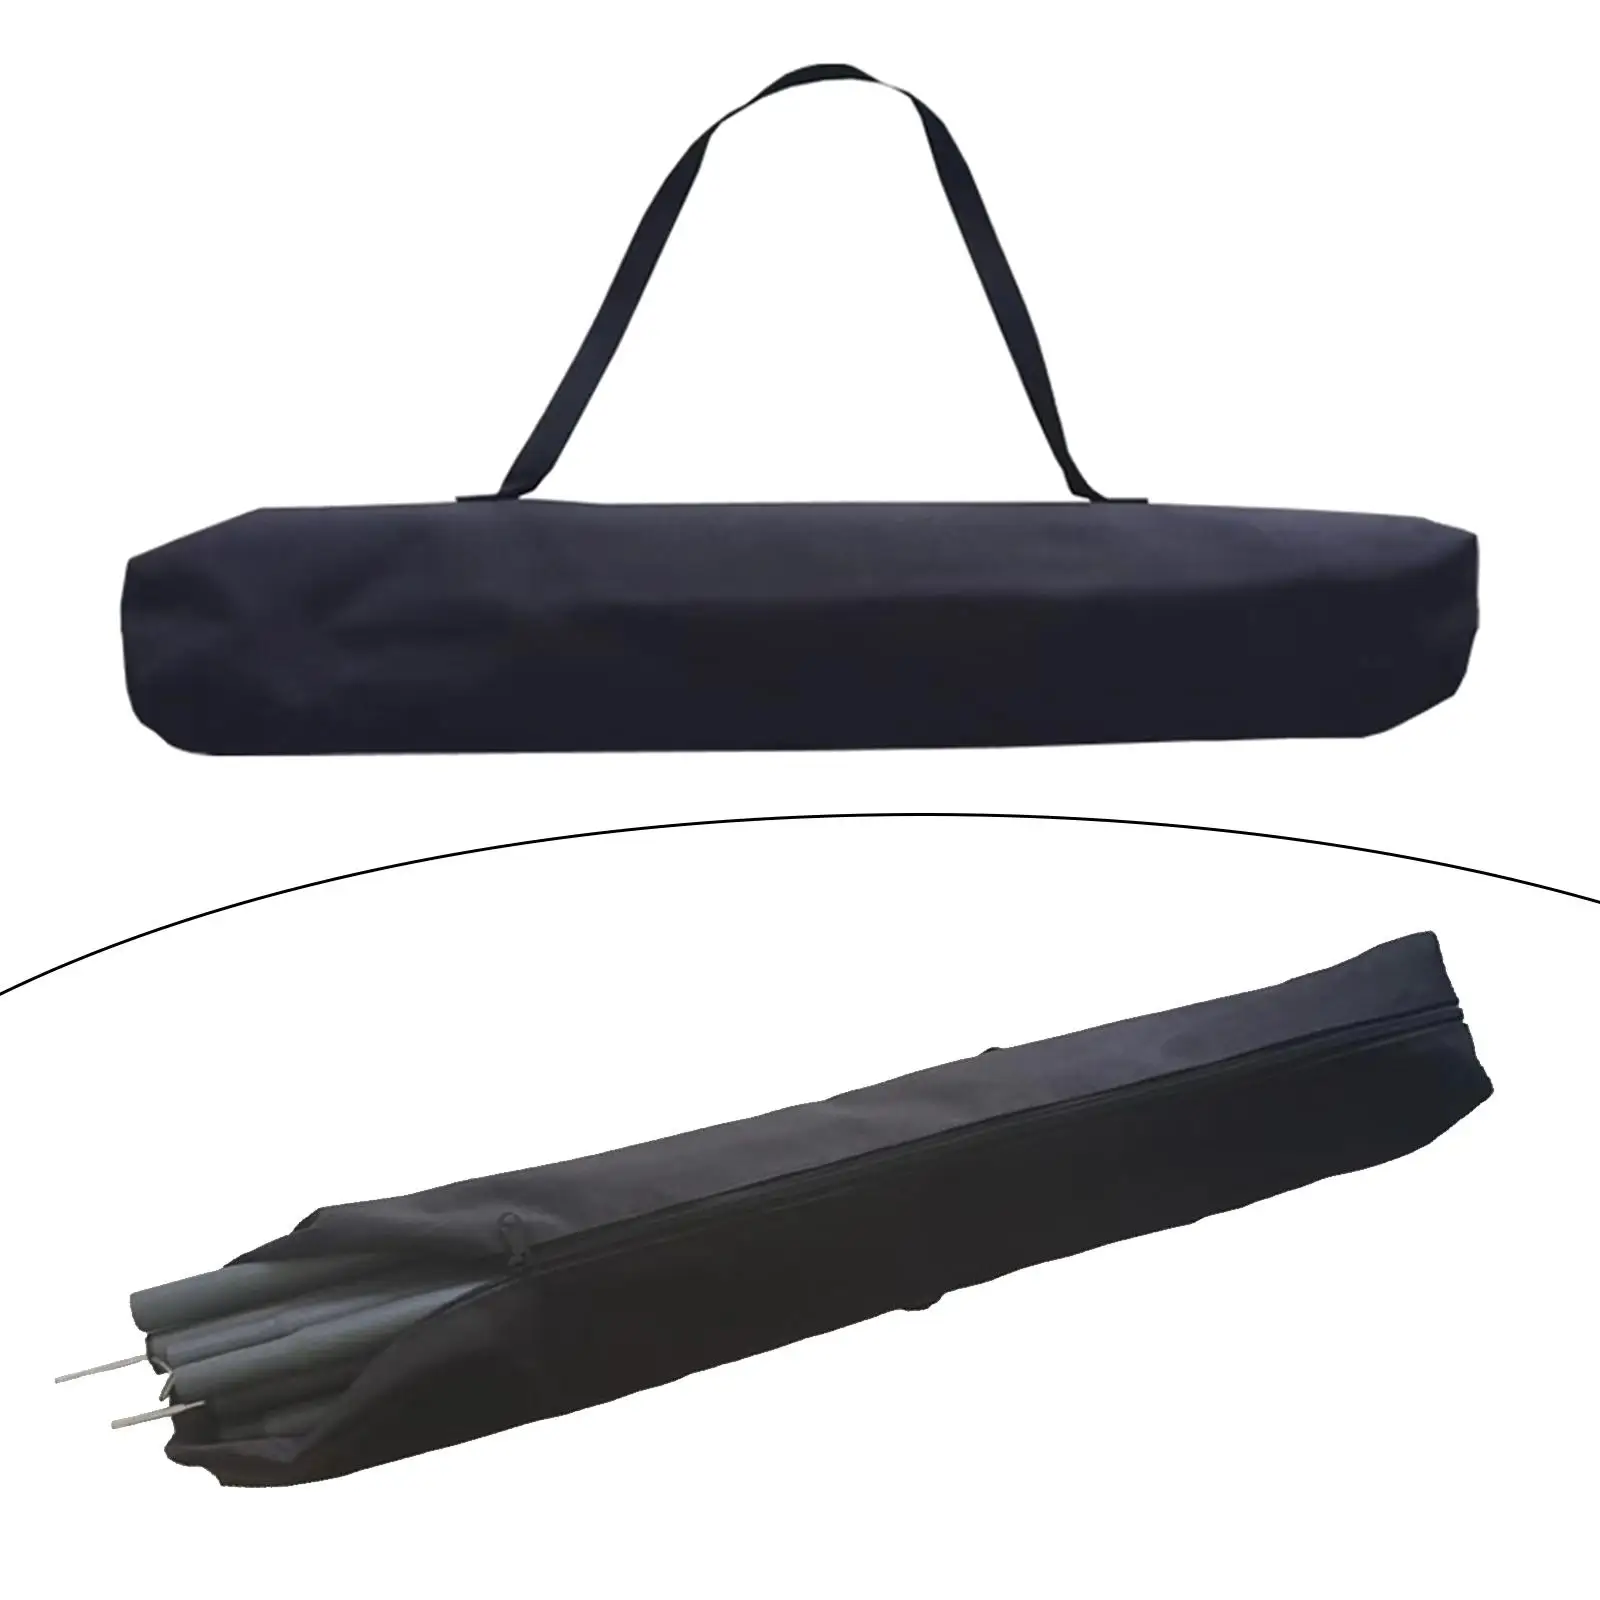 Tent Pole Storage Bag Lightweight Zipper Closure Camping Equipment Durable